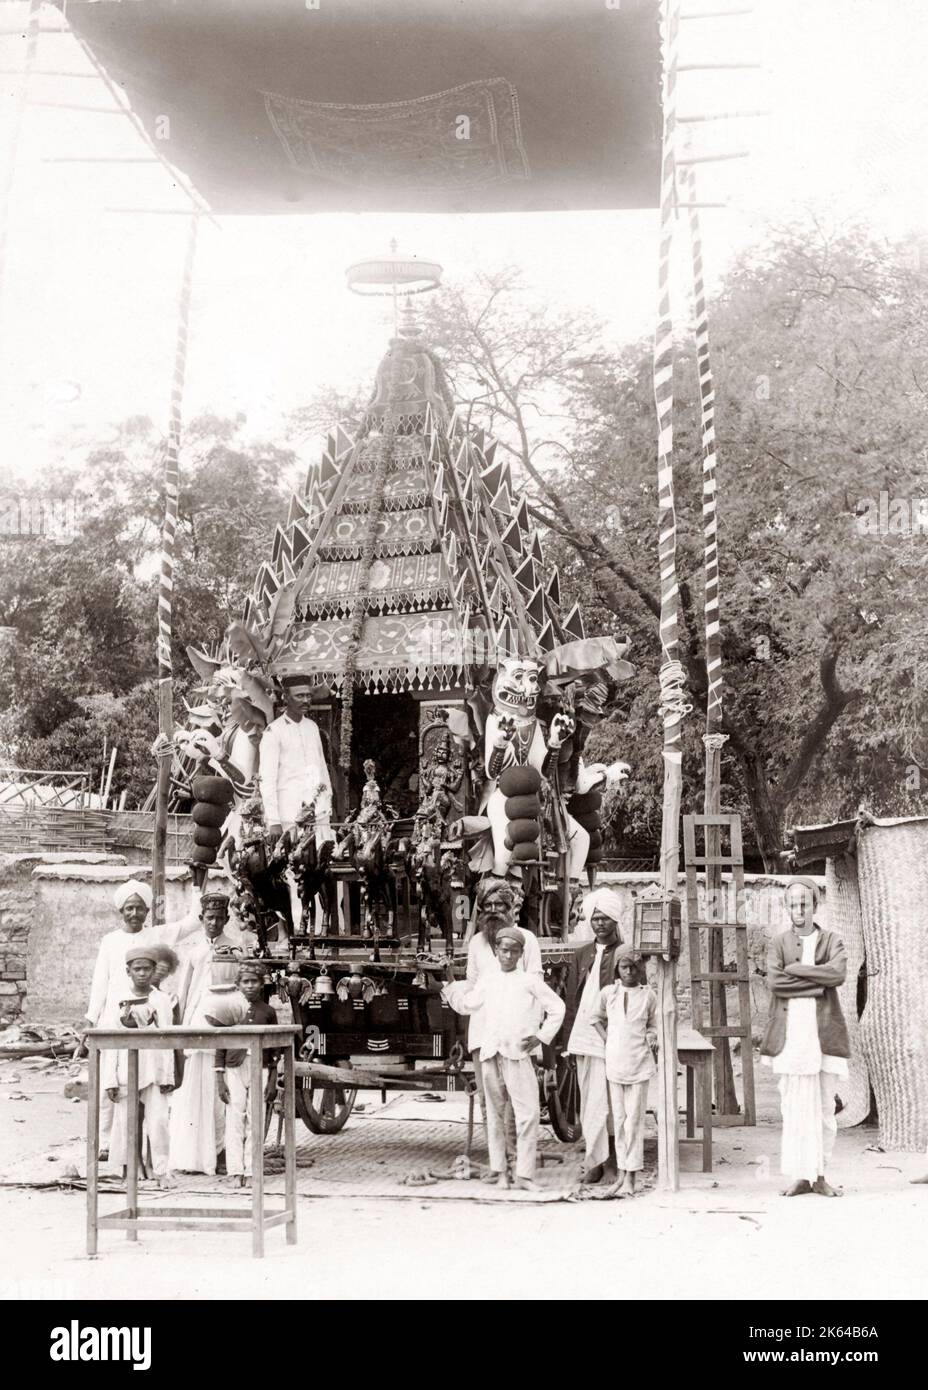 Juggernaut or religious festival car, India, c.1880's Stock Photo